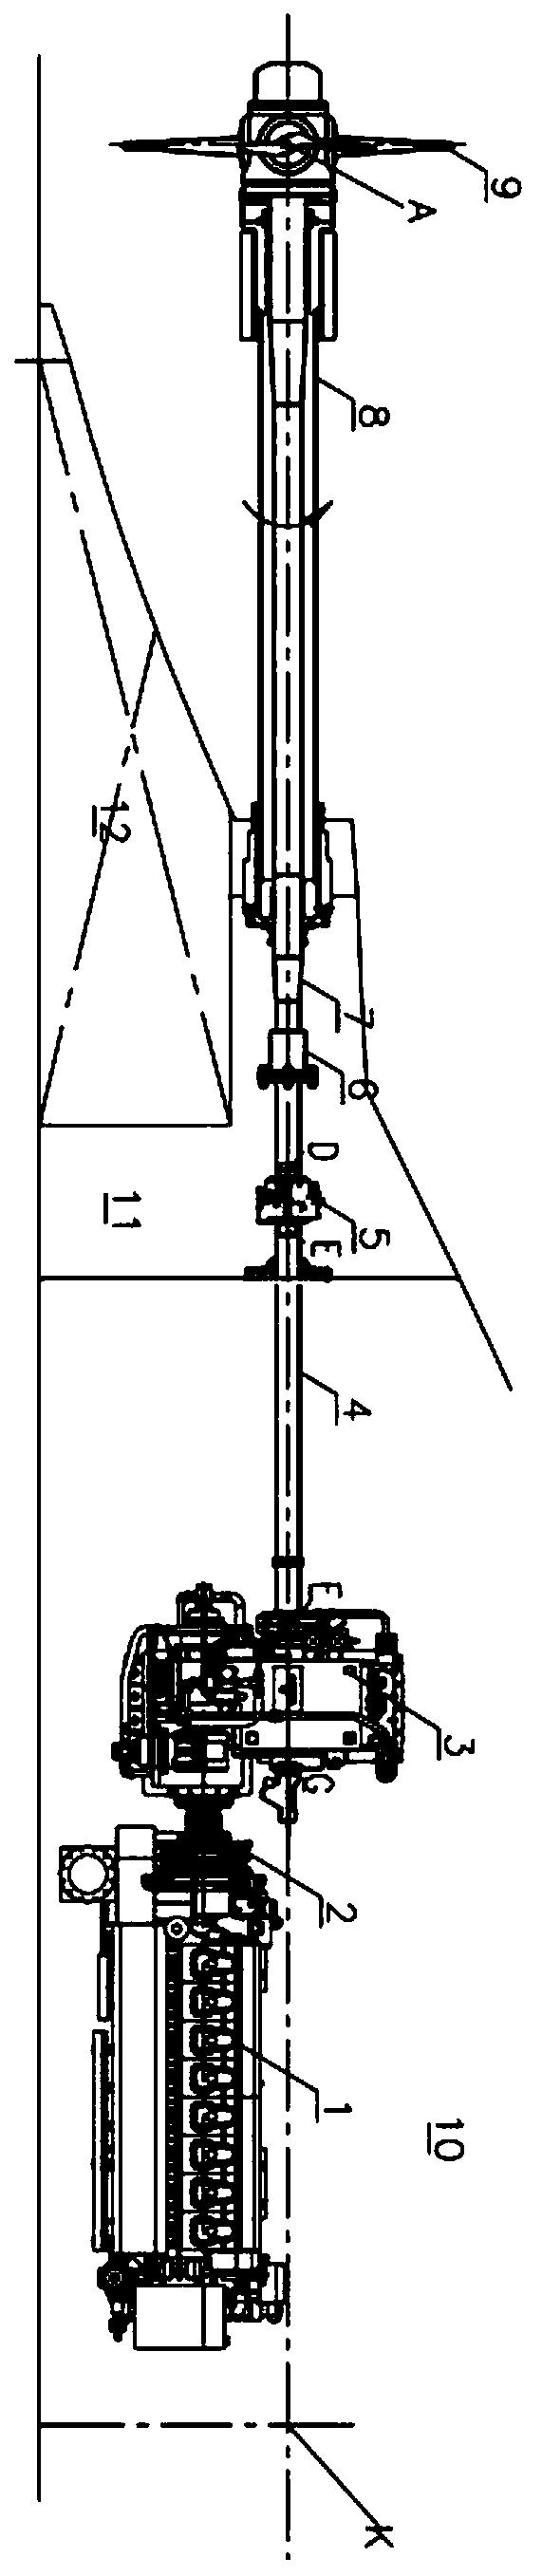 Marine shafting installation method